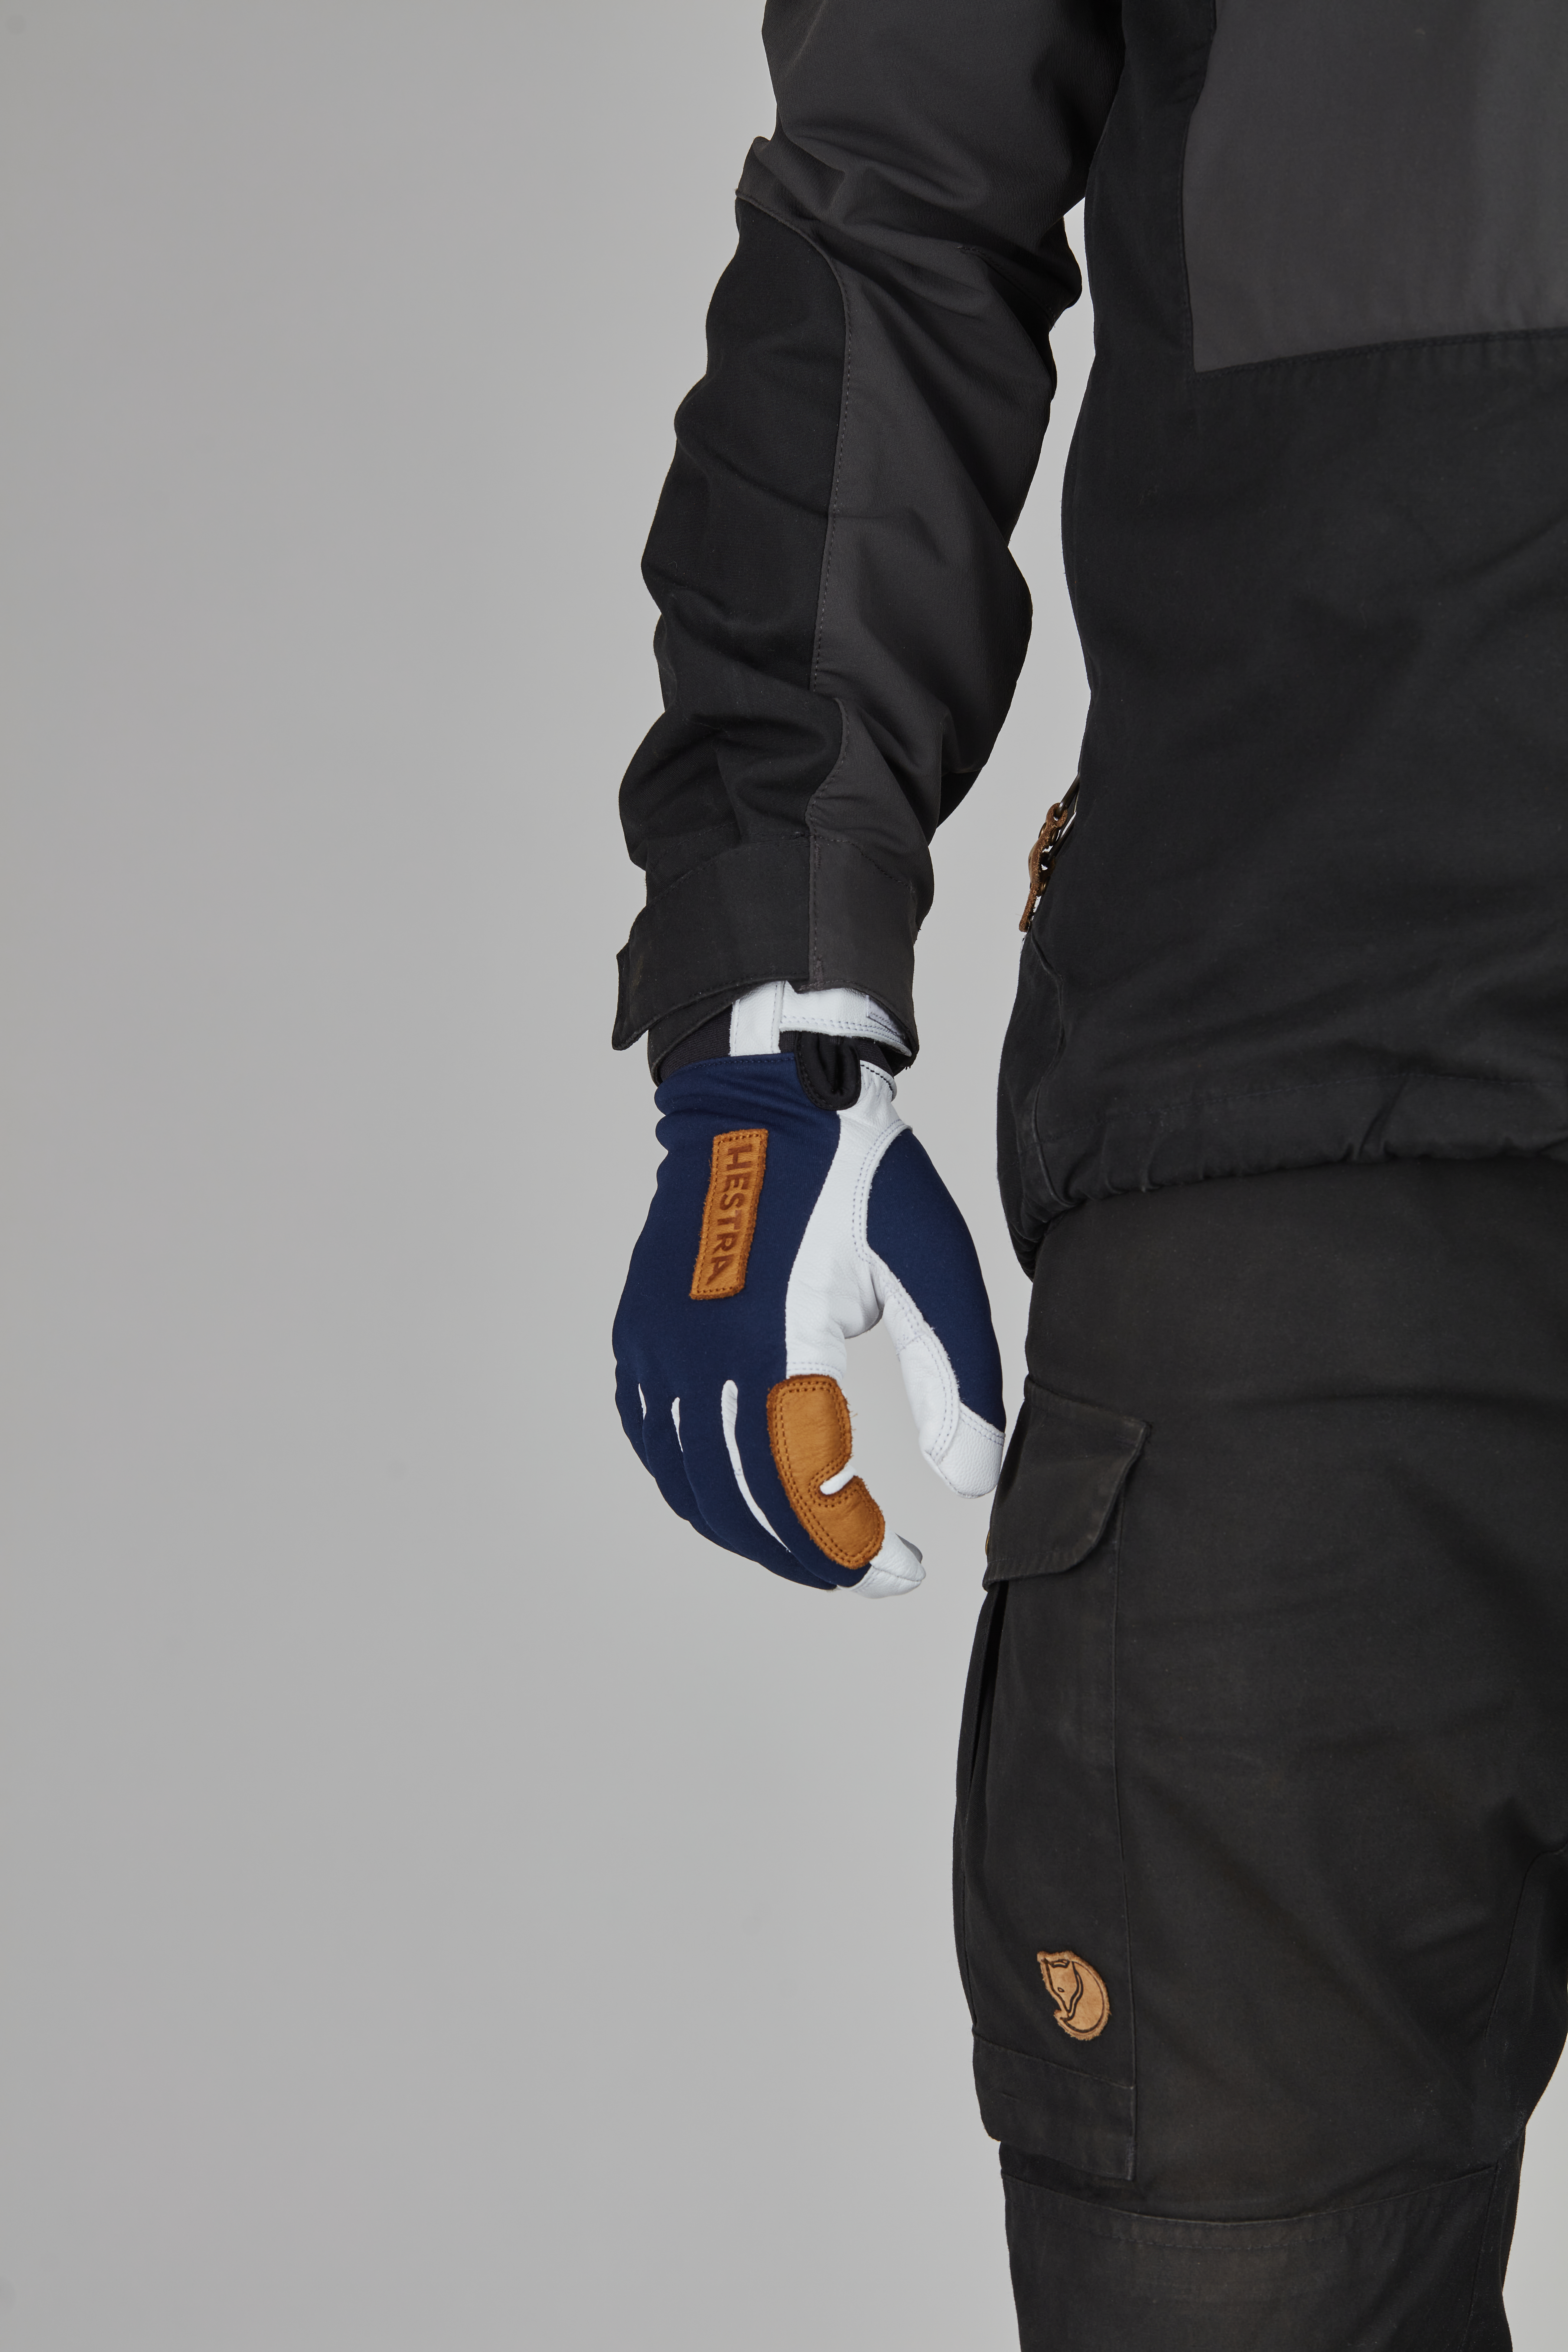 Ergo Grip Active Wool Terry - Navy & offwhite | Hestra Gloves